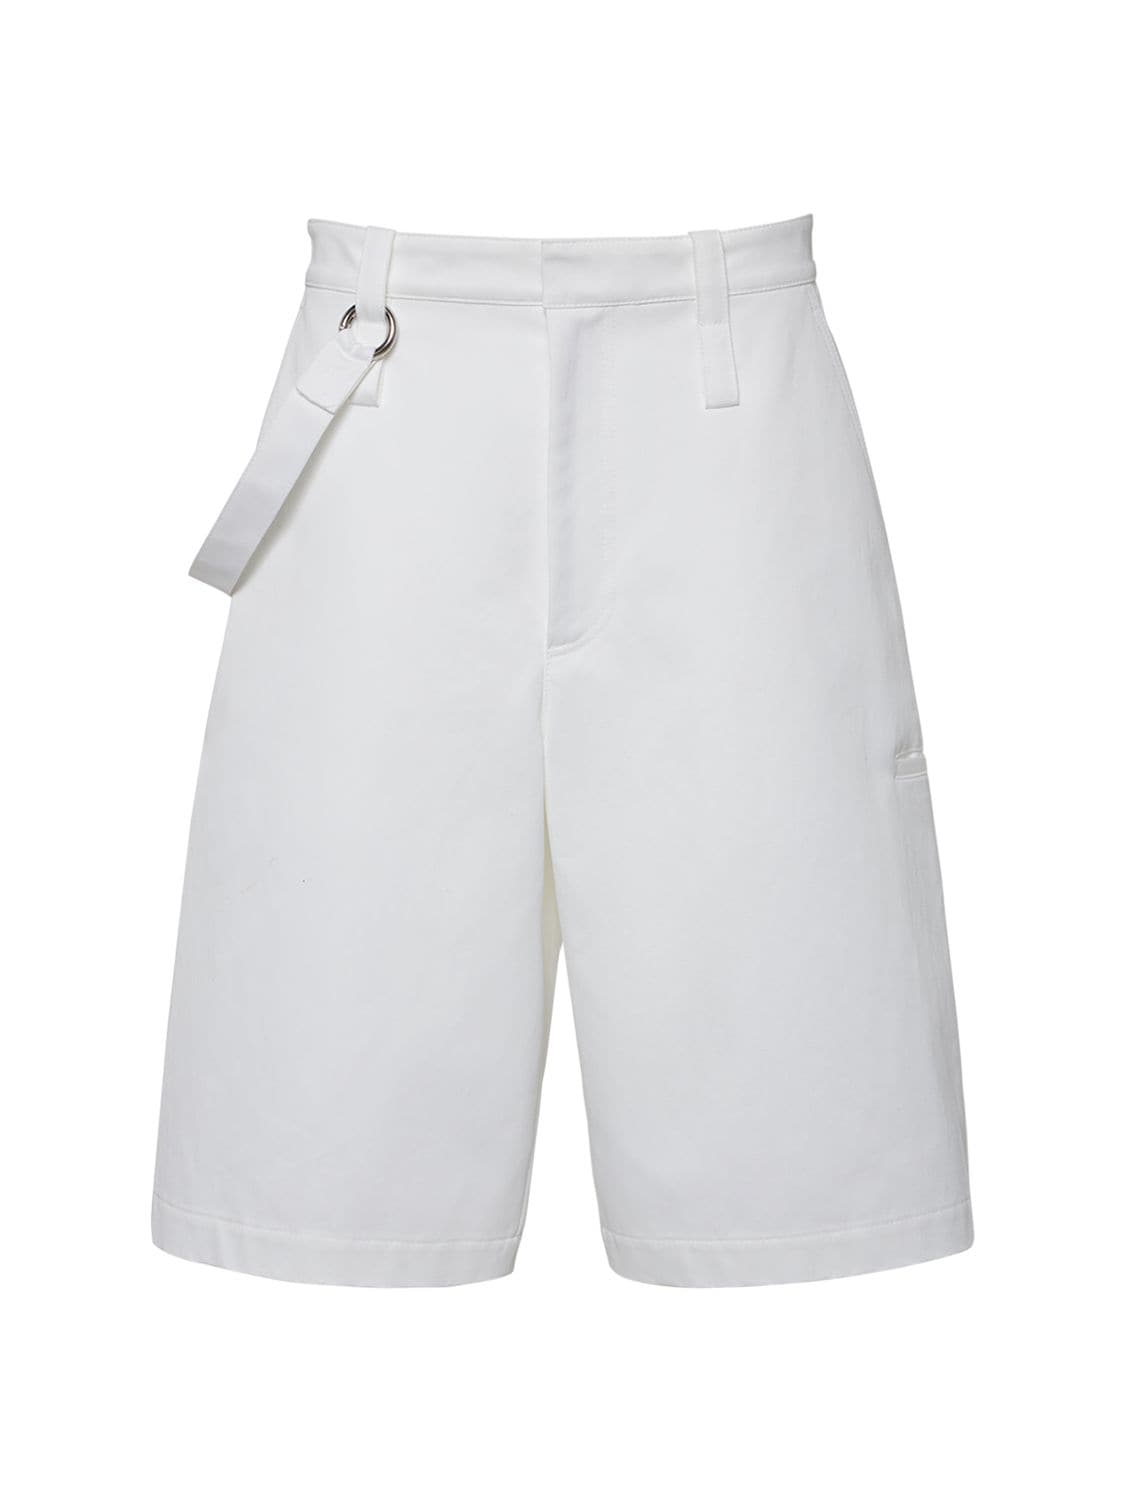 Image of Cotton Twill Shorts